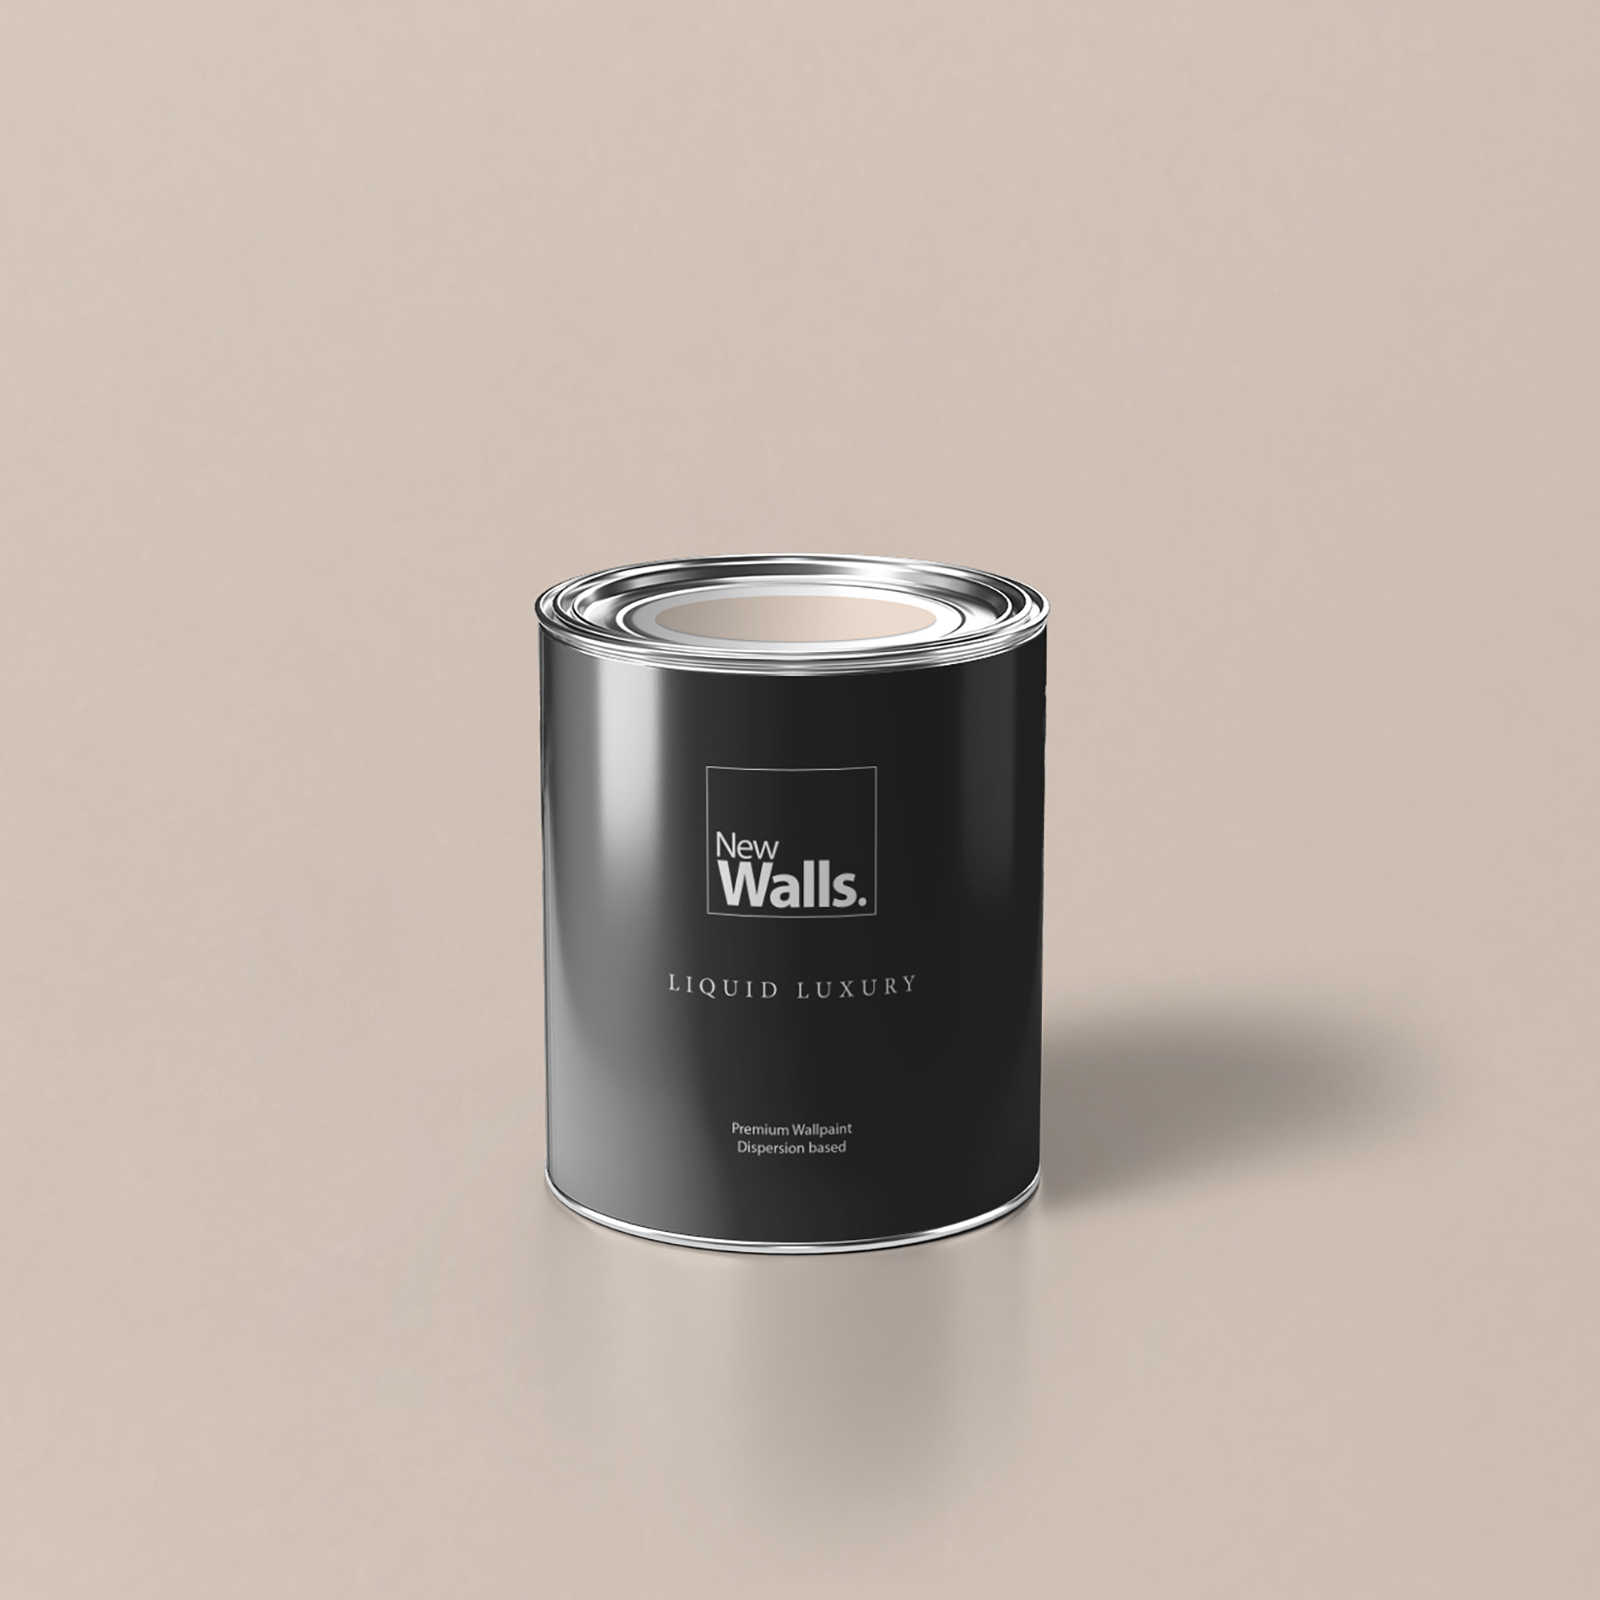         Premium Wandfarbe beruhigender Sand »Active Apricot« NW910 – 1 Liter
    